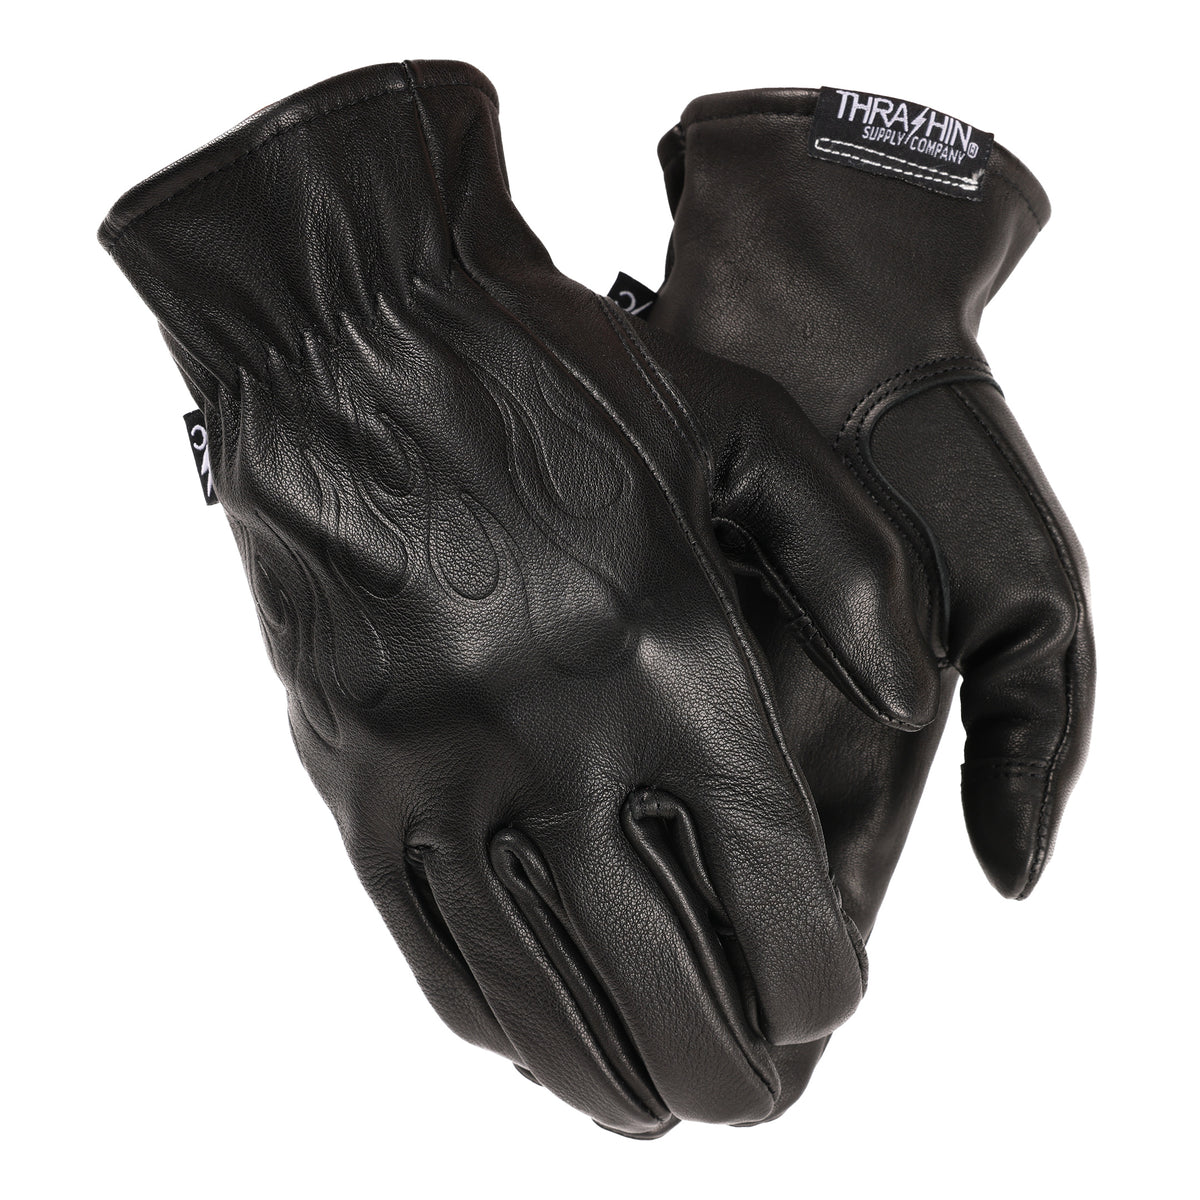 Roper Glove - Leather - Black